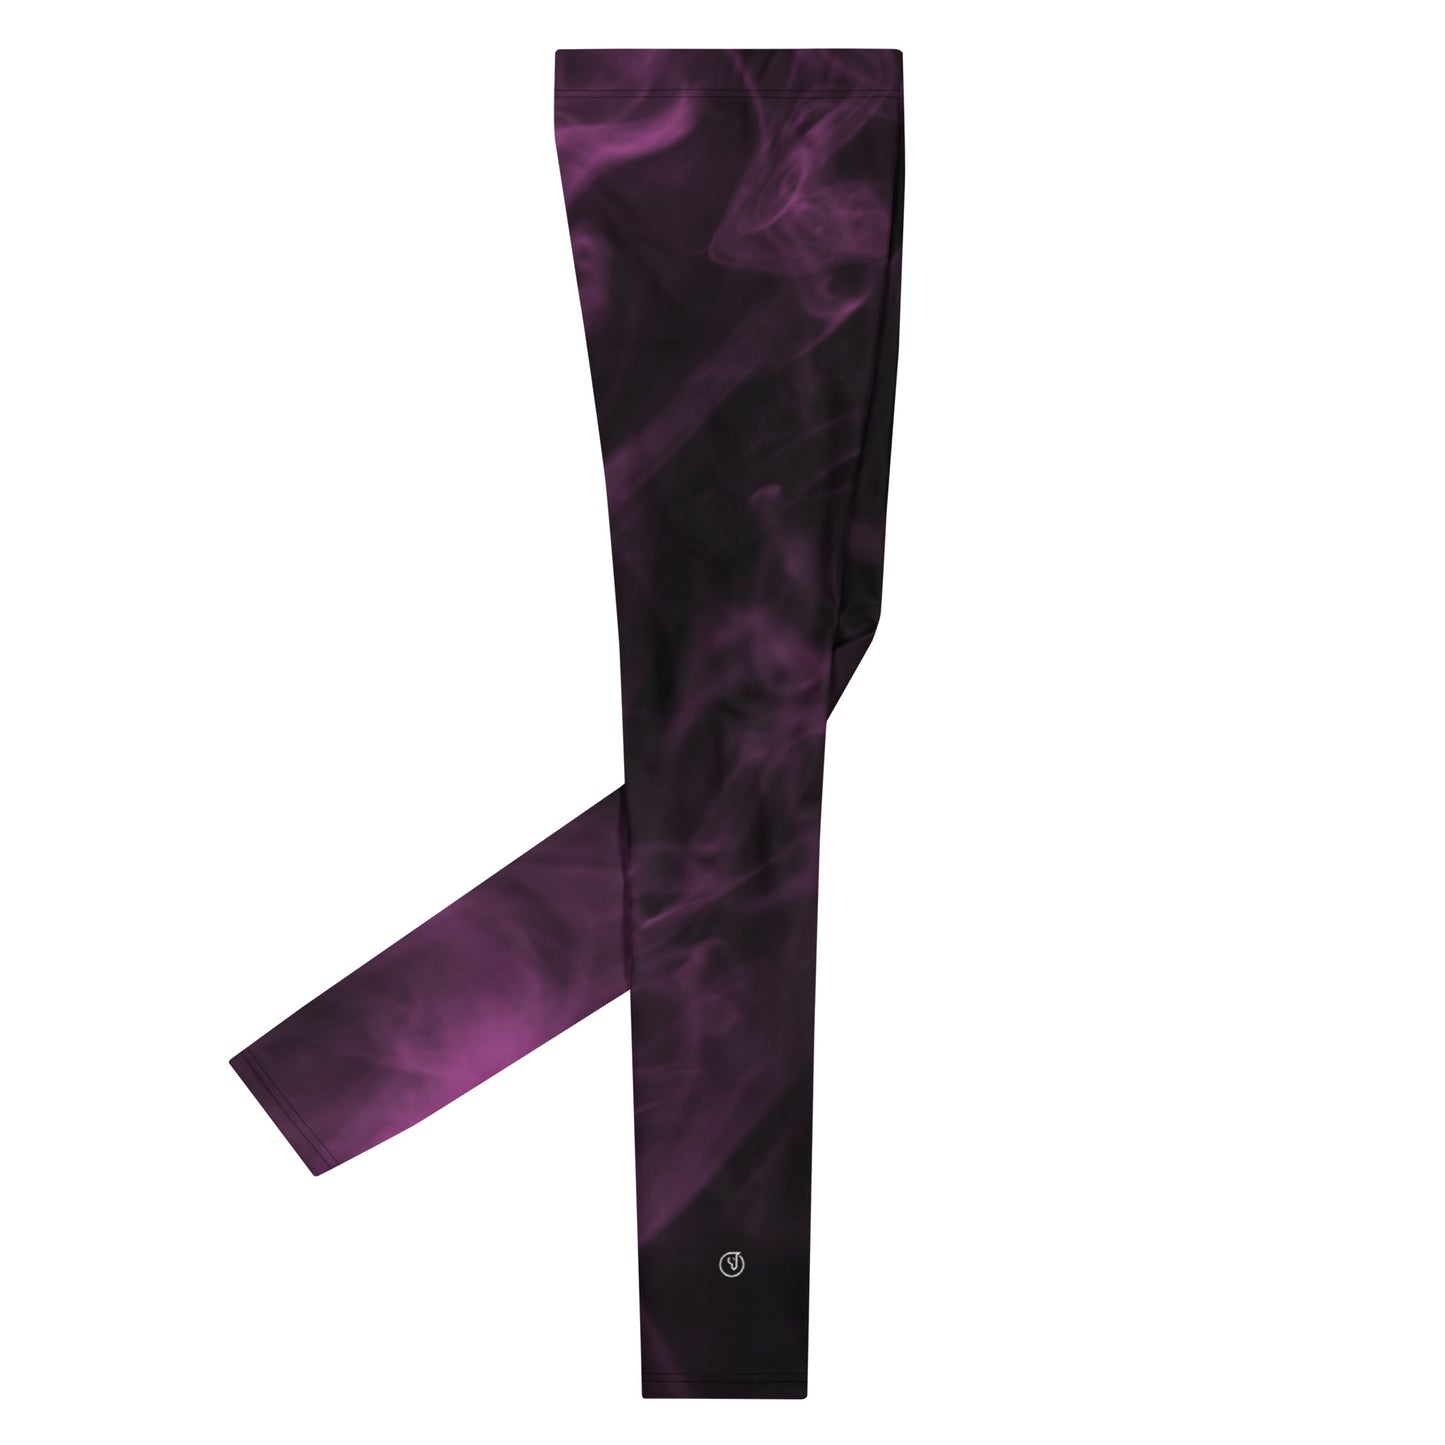 Humble Sportswear, men's all-over print purple smoke vapor compression performance activewear leggings